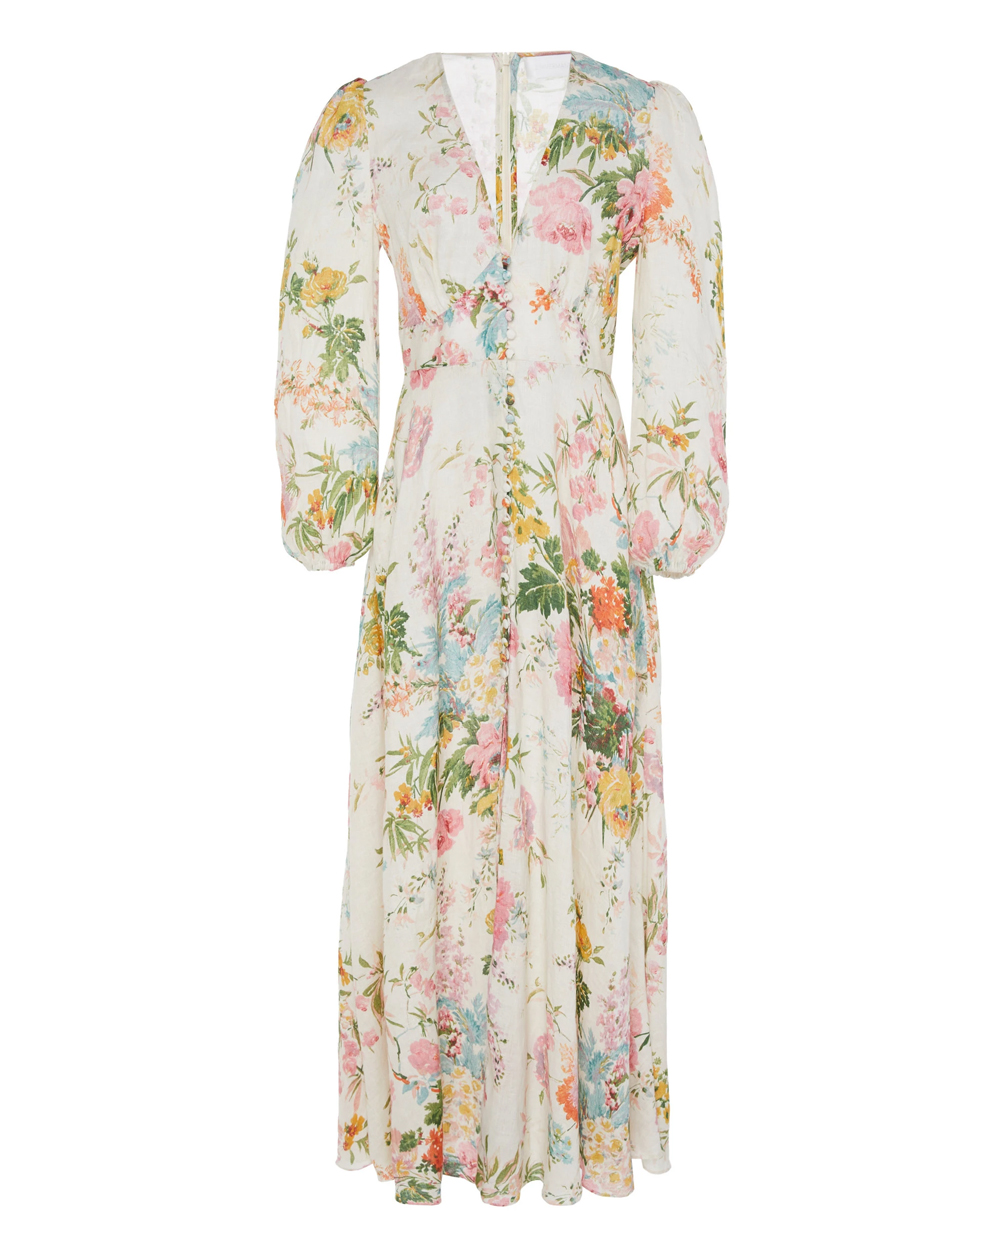 Zimmermann linen maxi dress, $695 USD from Moda Operandi